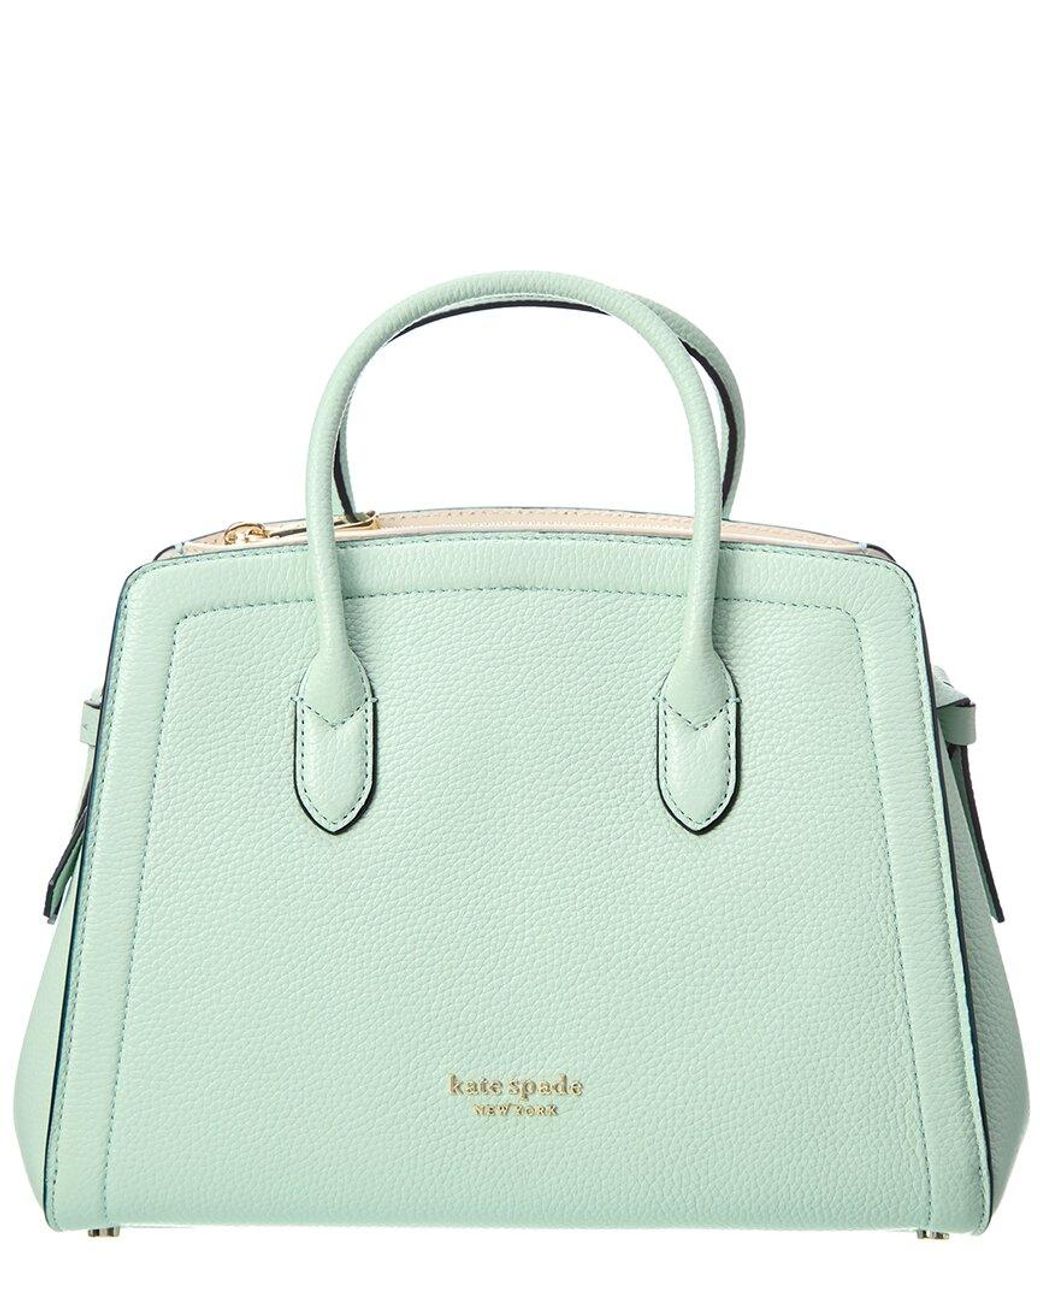 Women's Kate Spade New York Handbags + FREE SHIPPING | Bags | Zappos.com